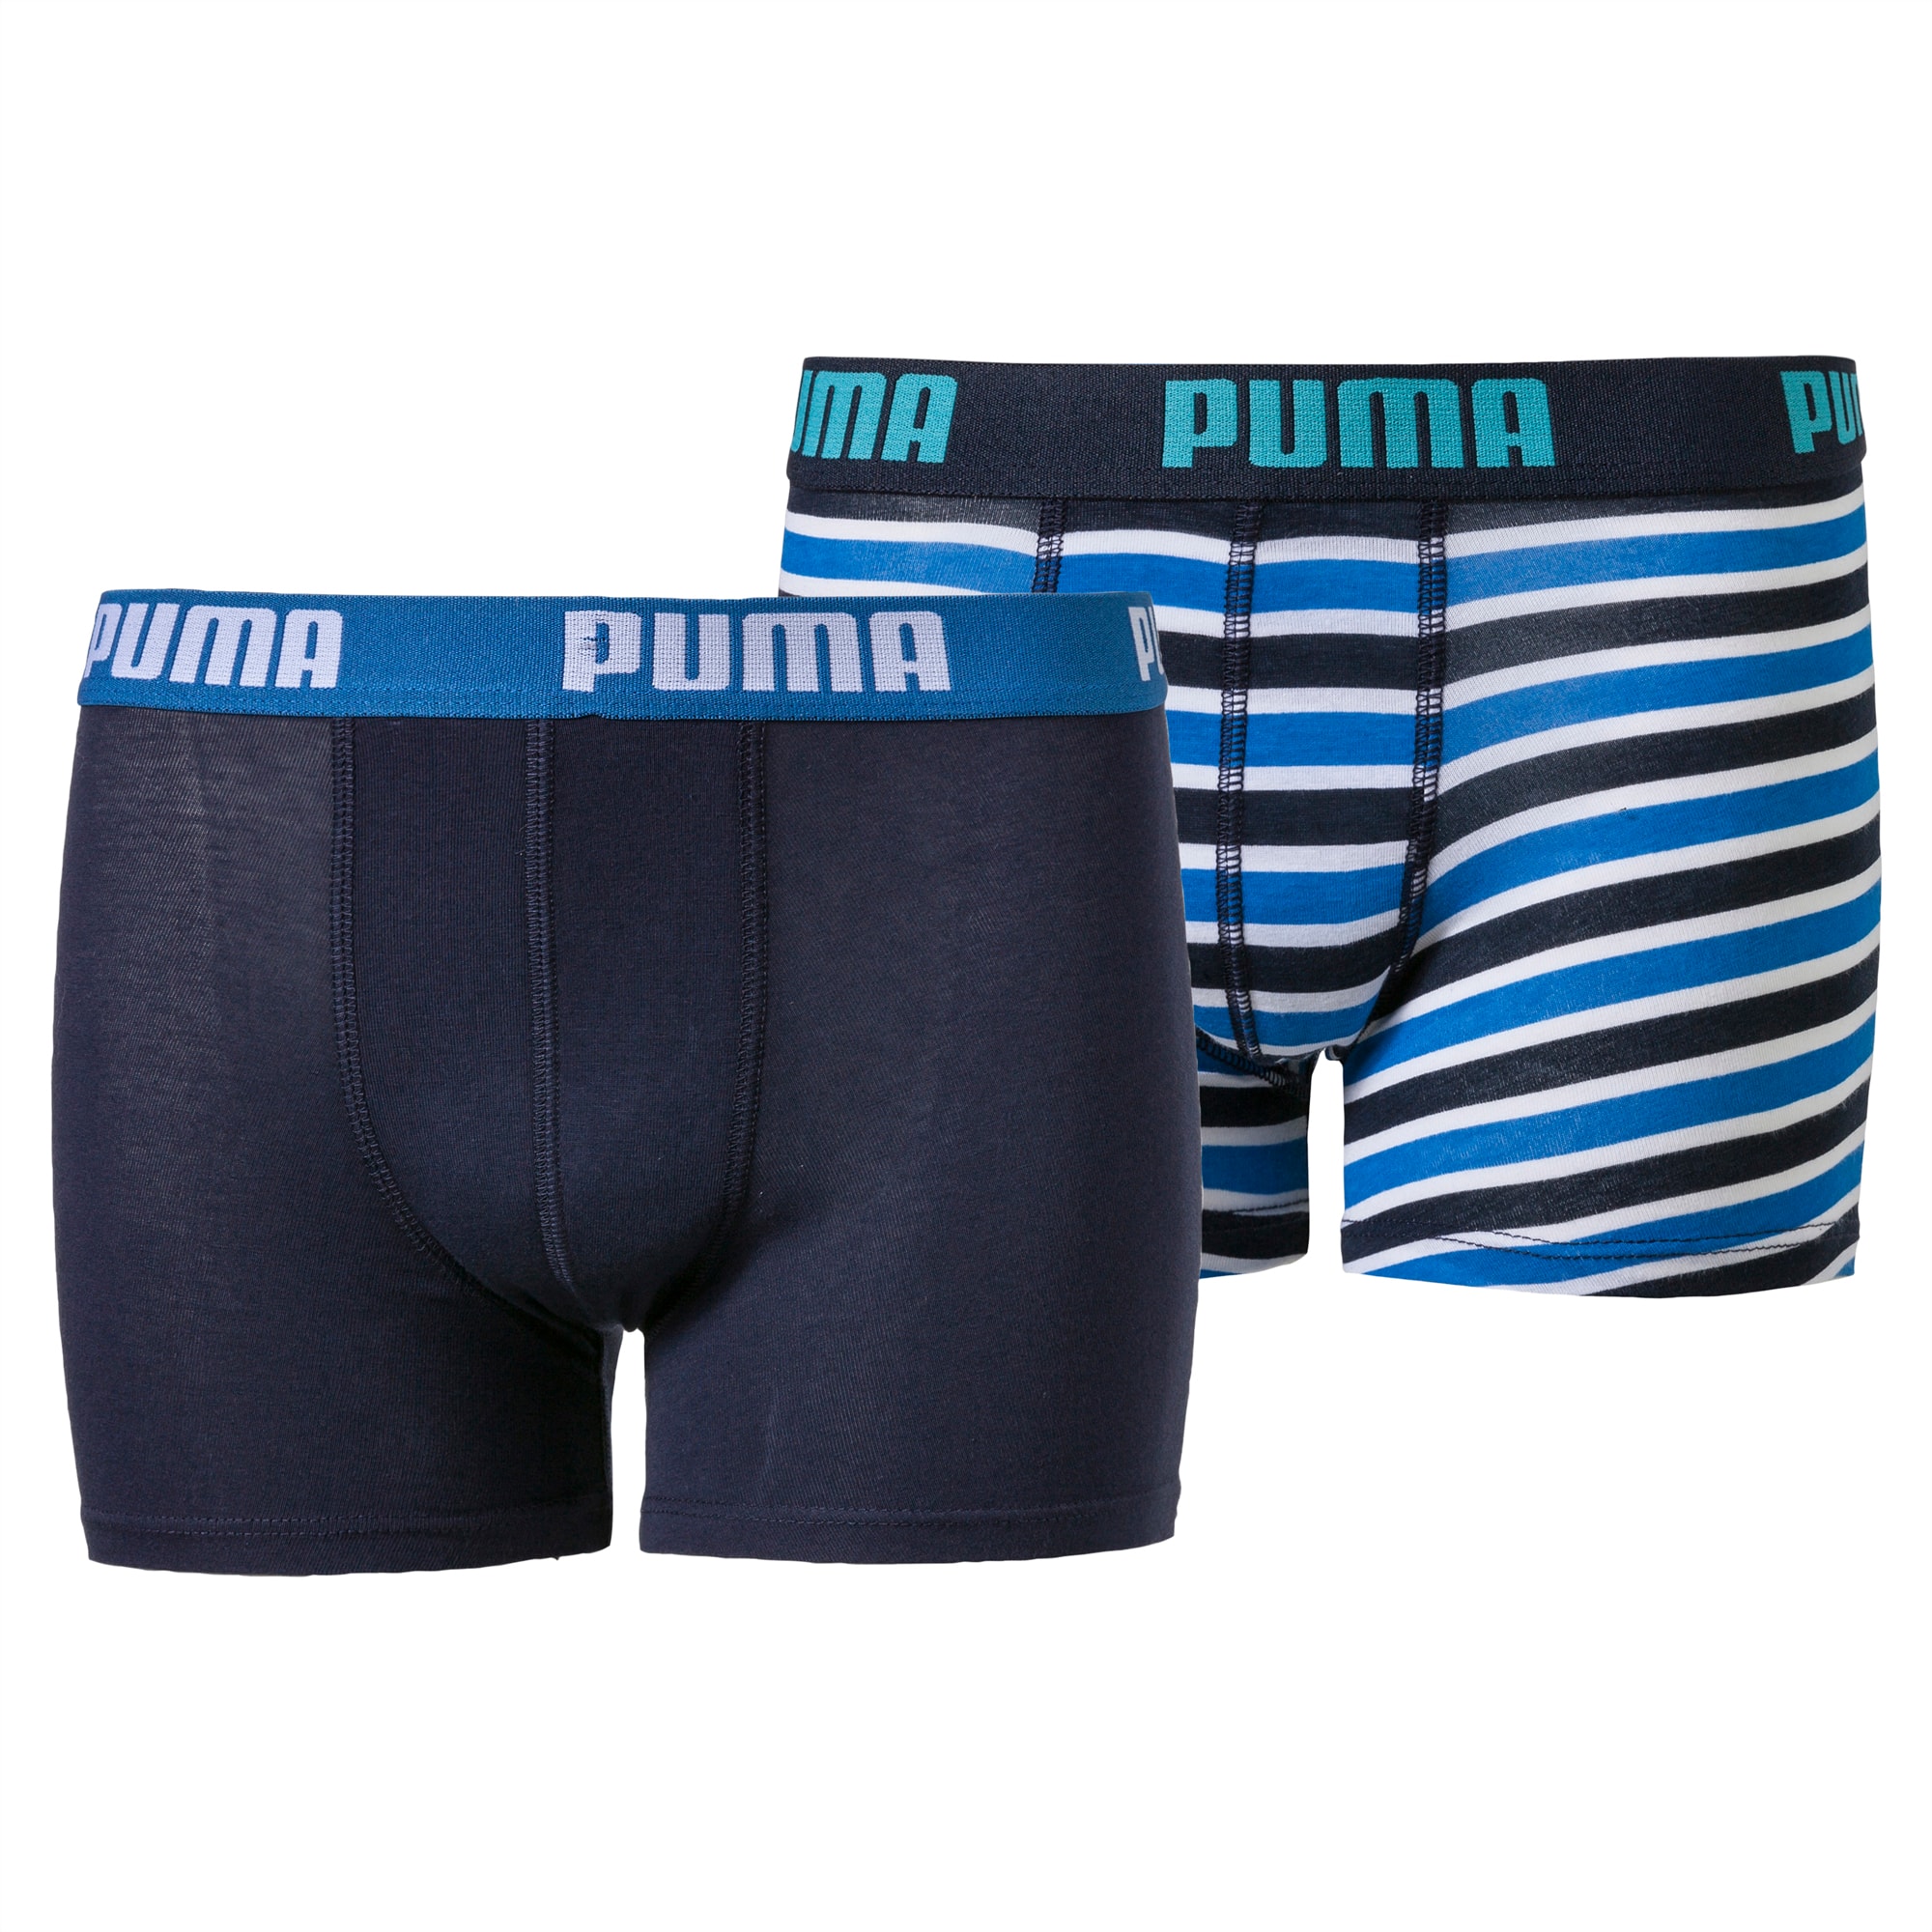 puma boxershorts 2 pack